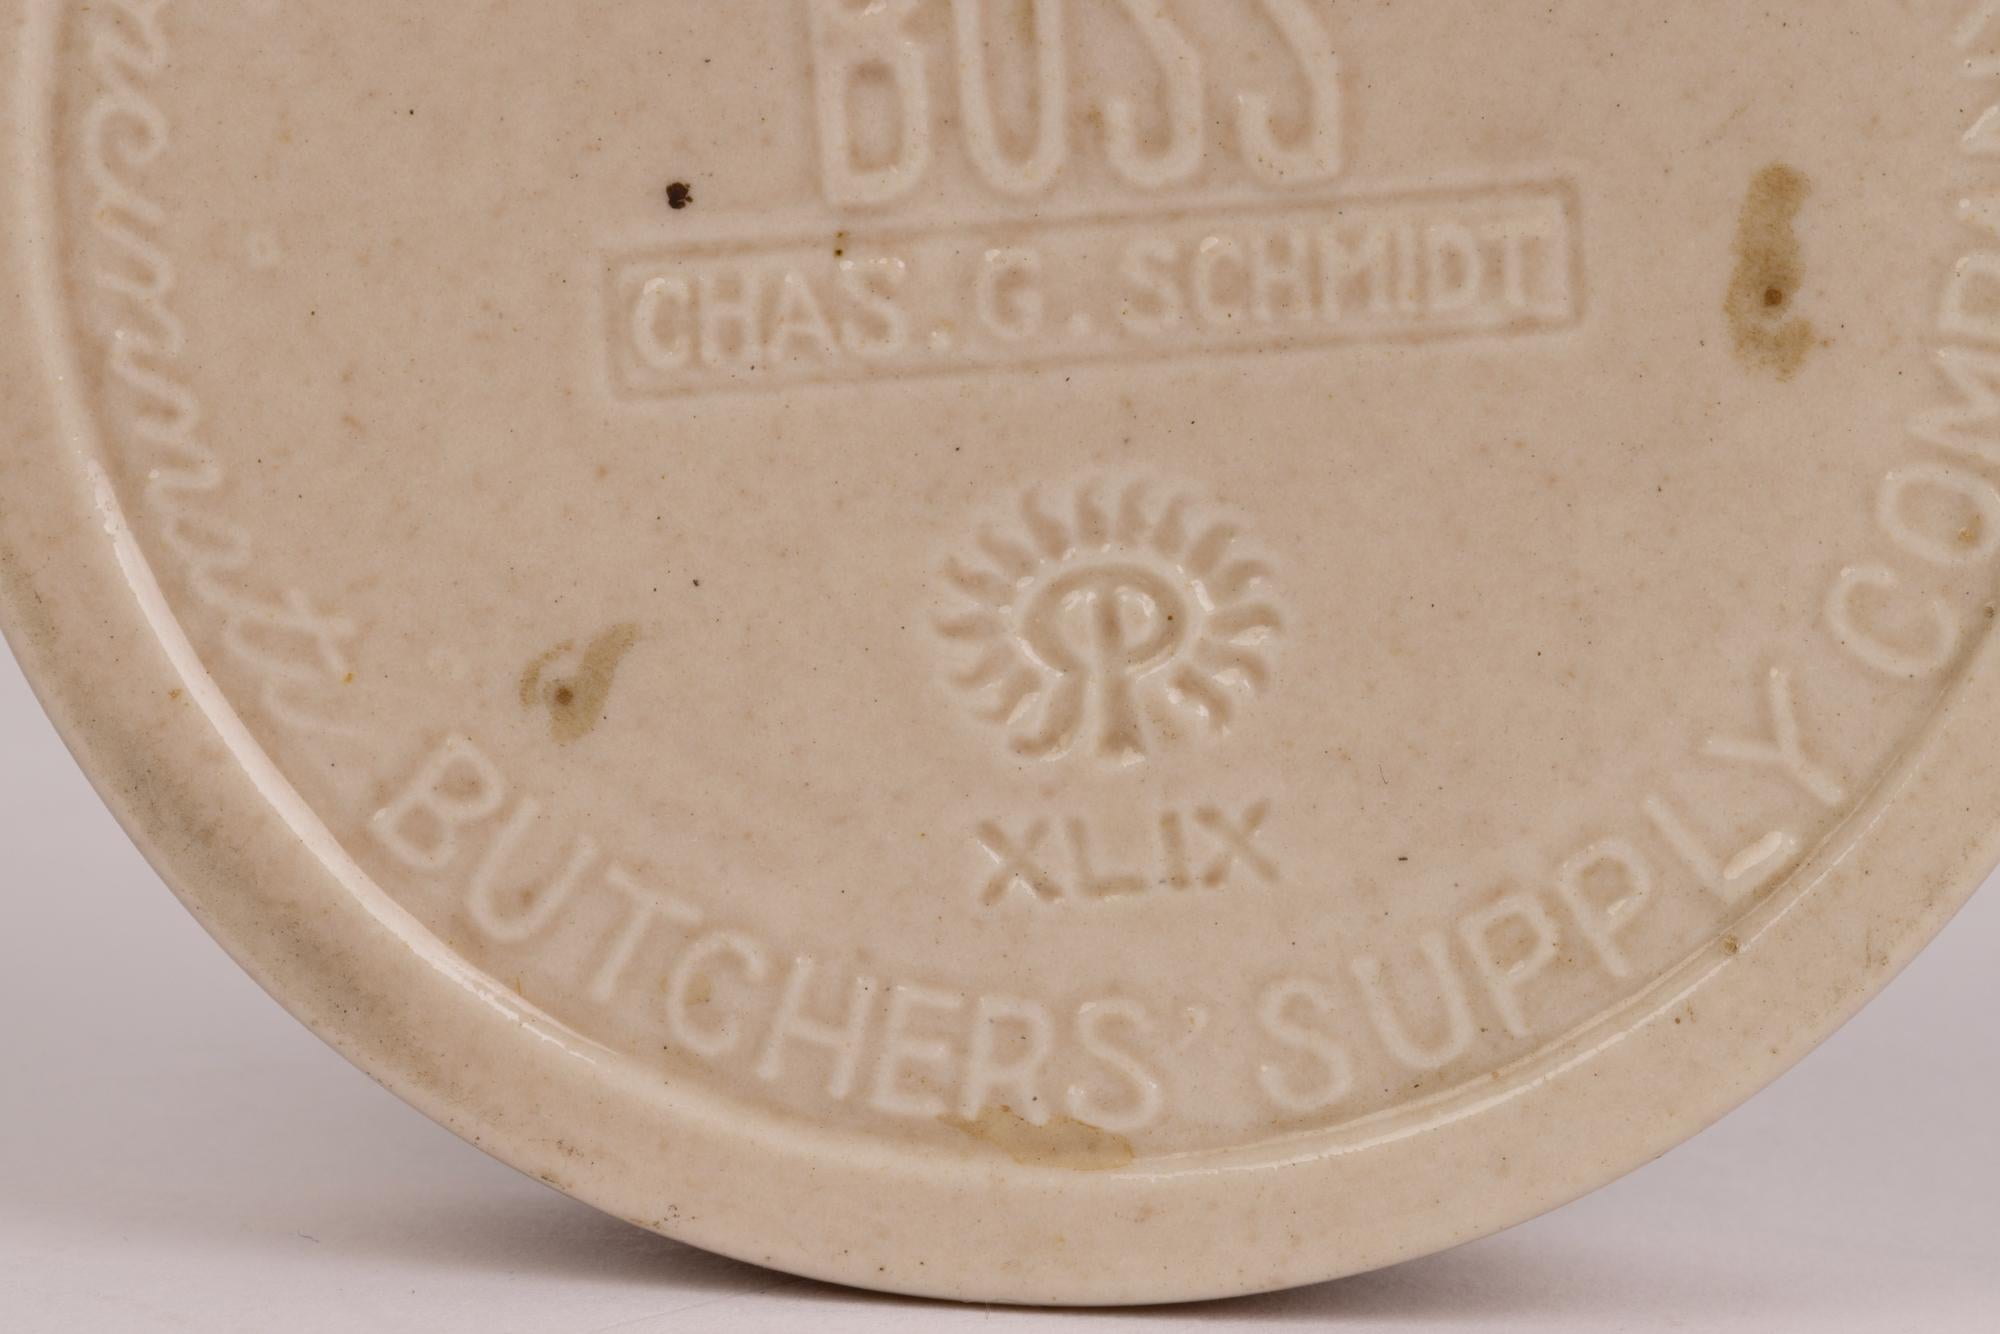 Rookwood Chas G Schmidt Boss Butchers Ceramic Advertising Paperweight 6